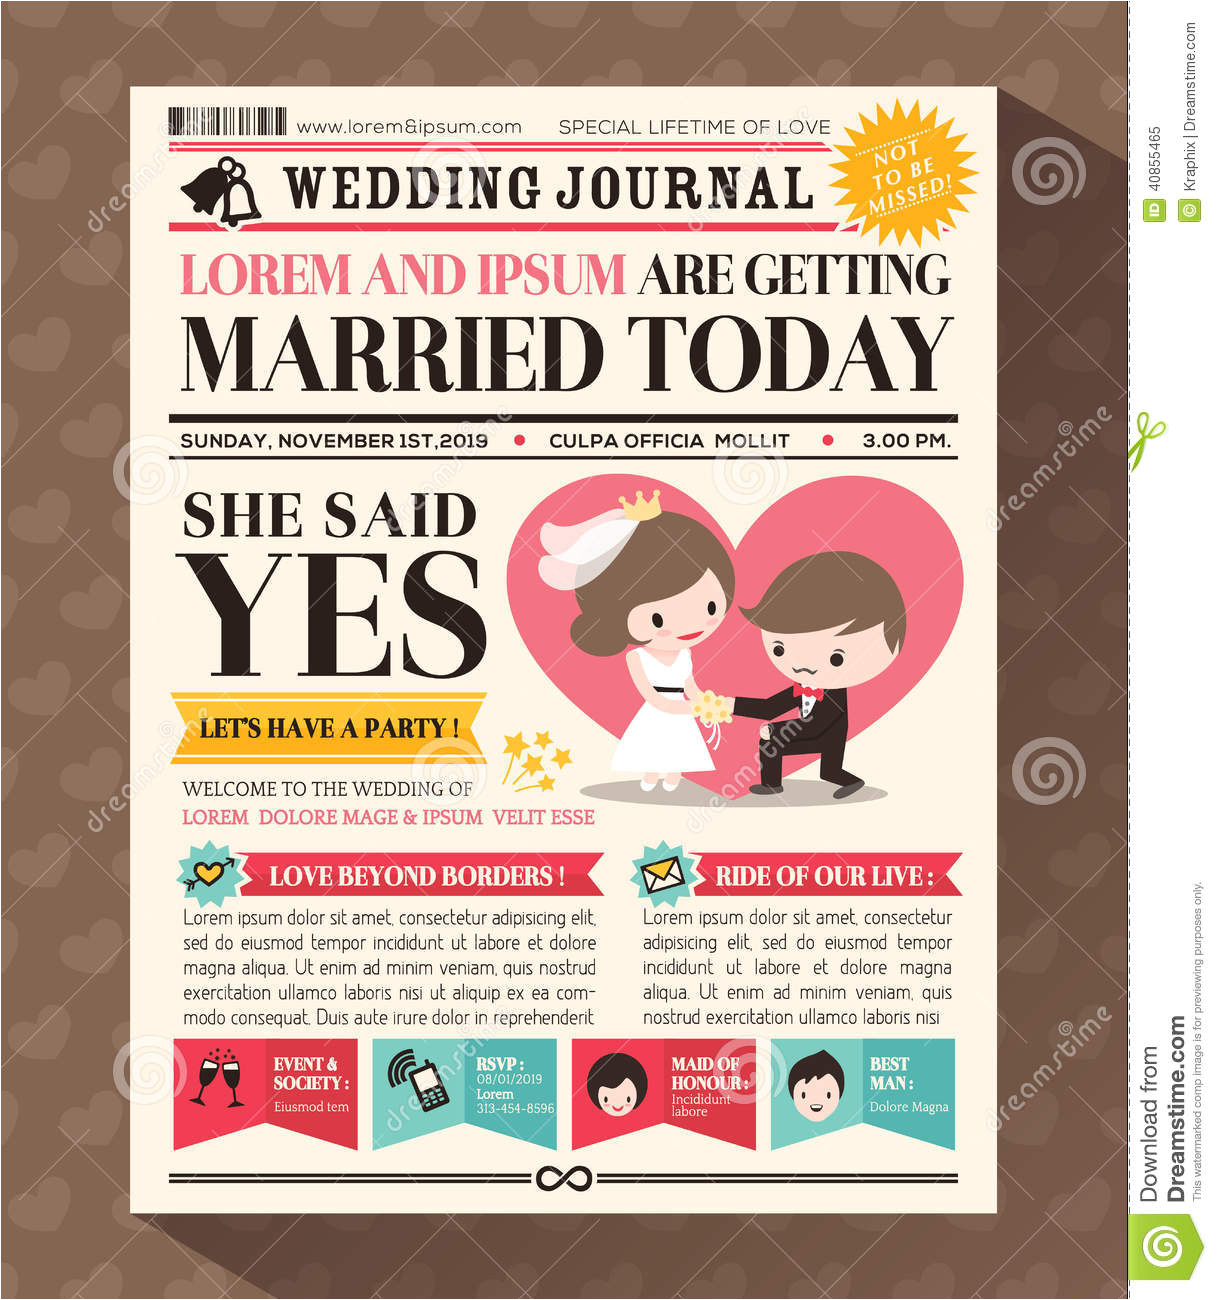 royalty free stock photo cartoon newspaper wedding invitation card design journal vector template image40855465